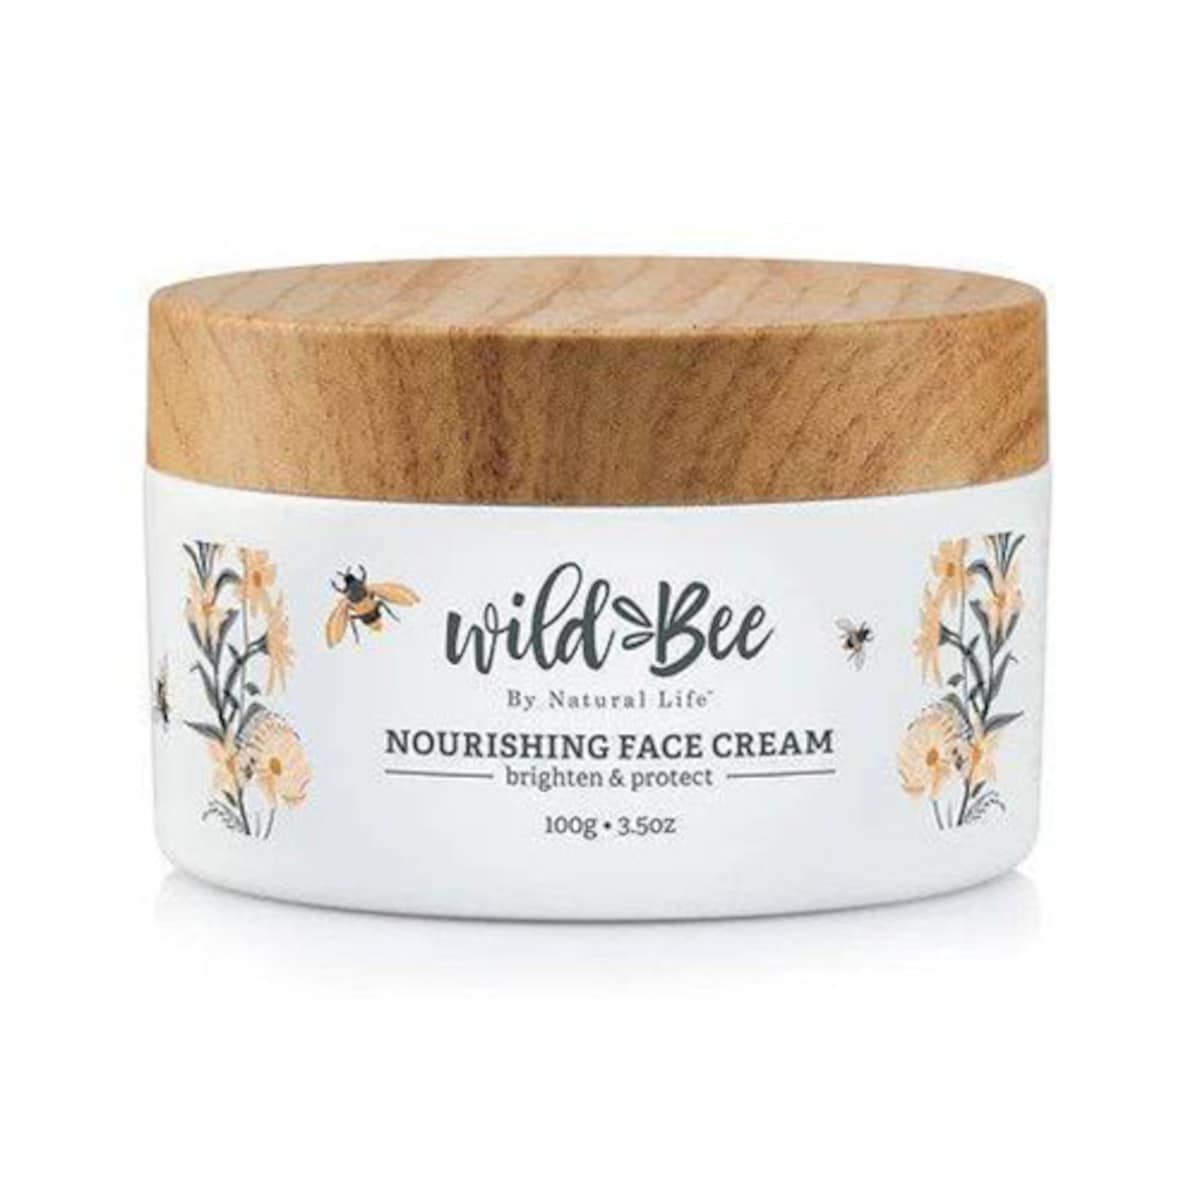 Wild Bee Nourishing Face Cream 100g